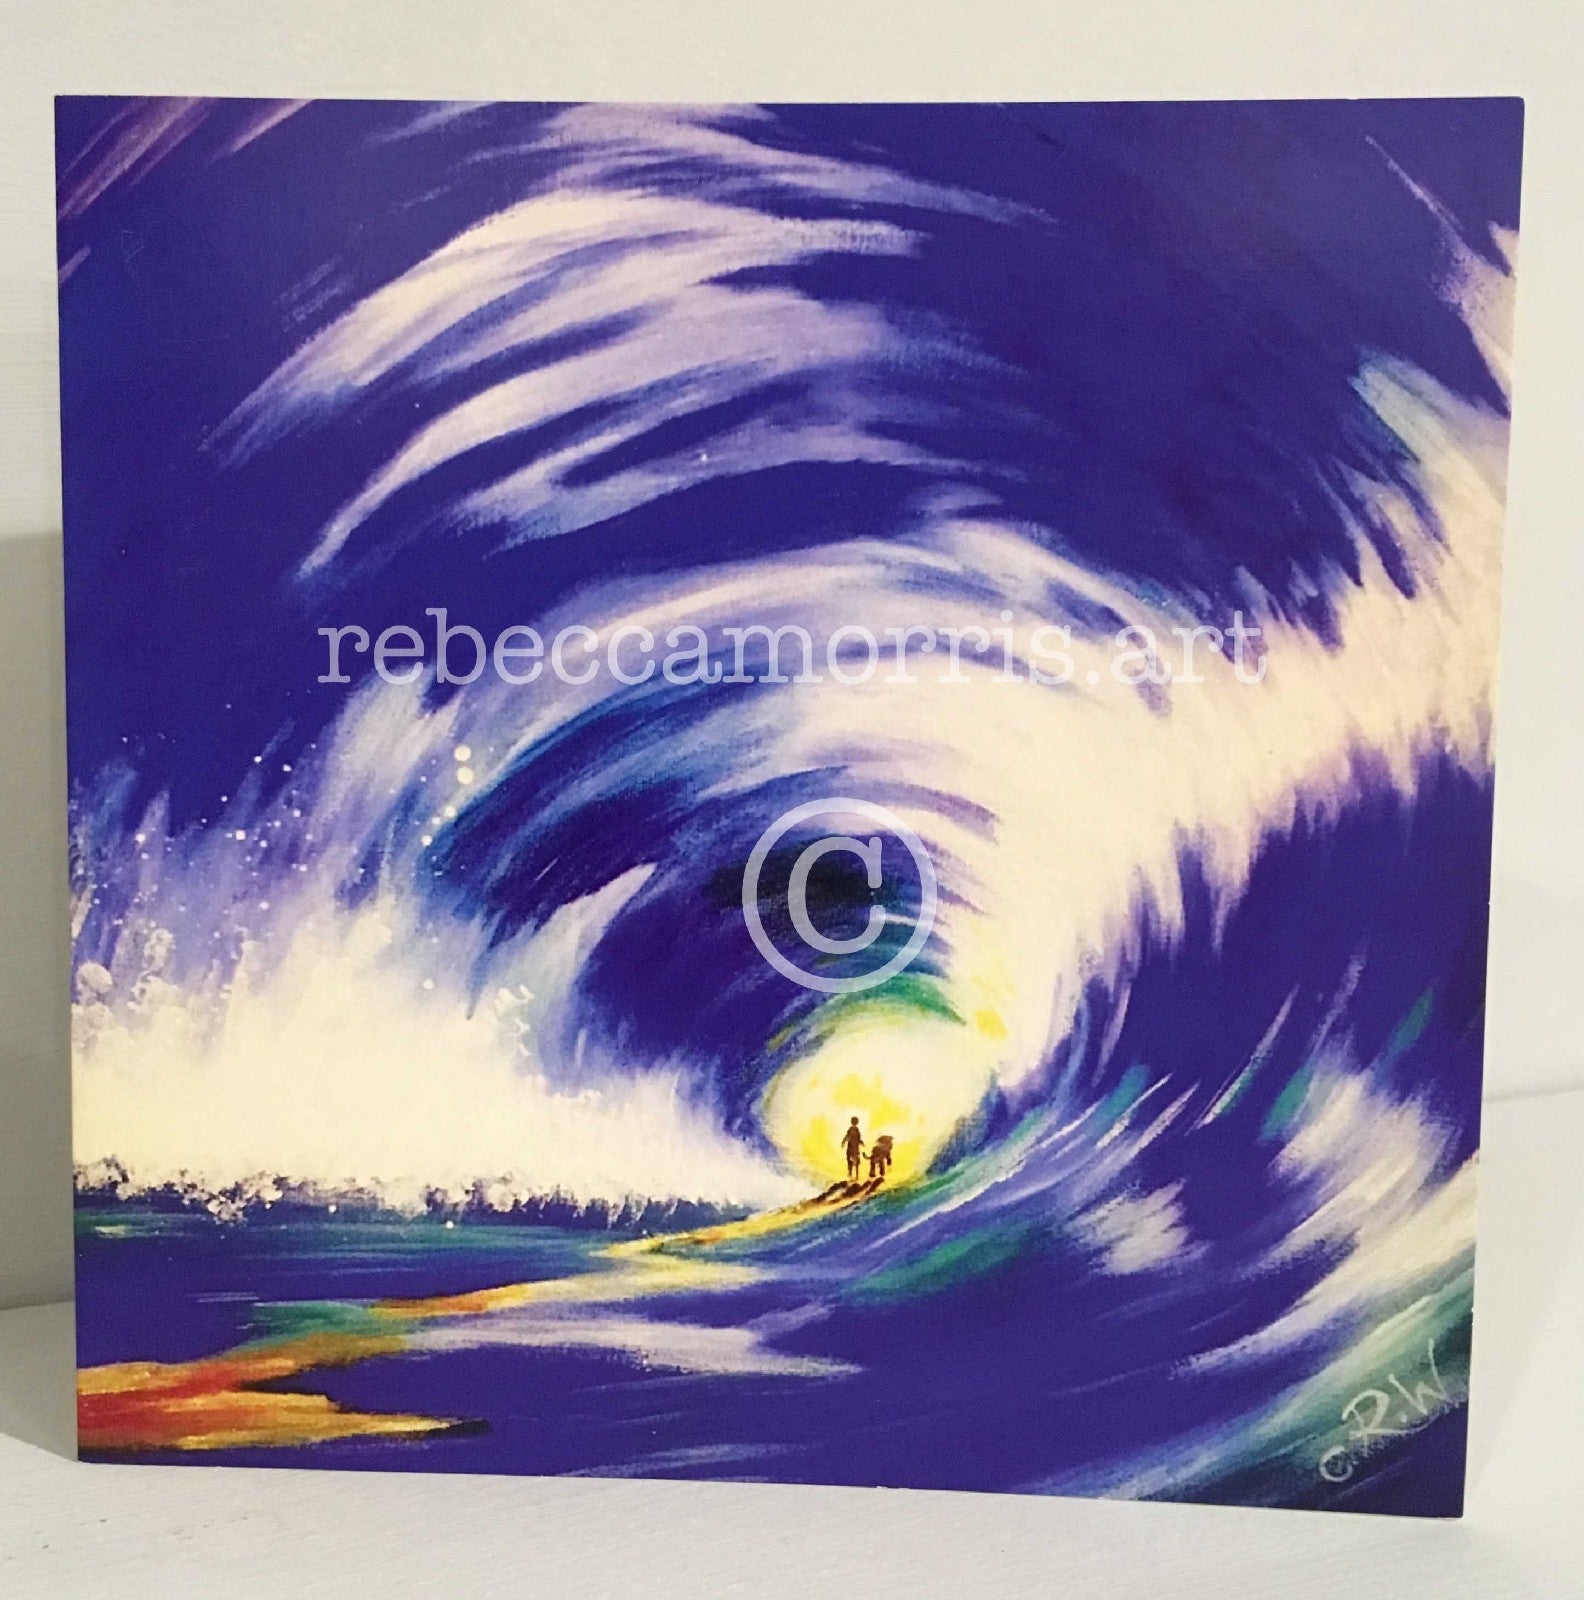 Rebecca Morris Art - Through The Wave